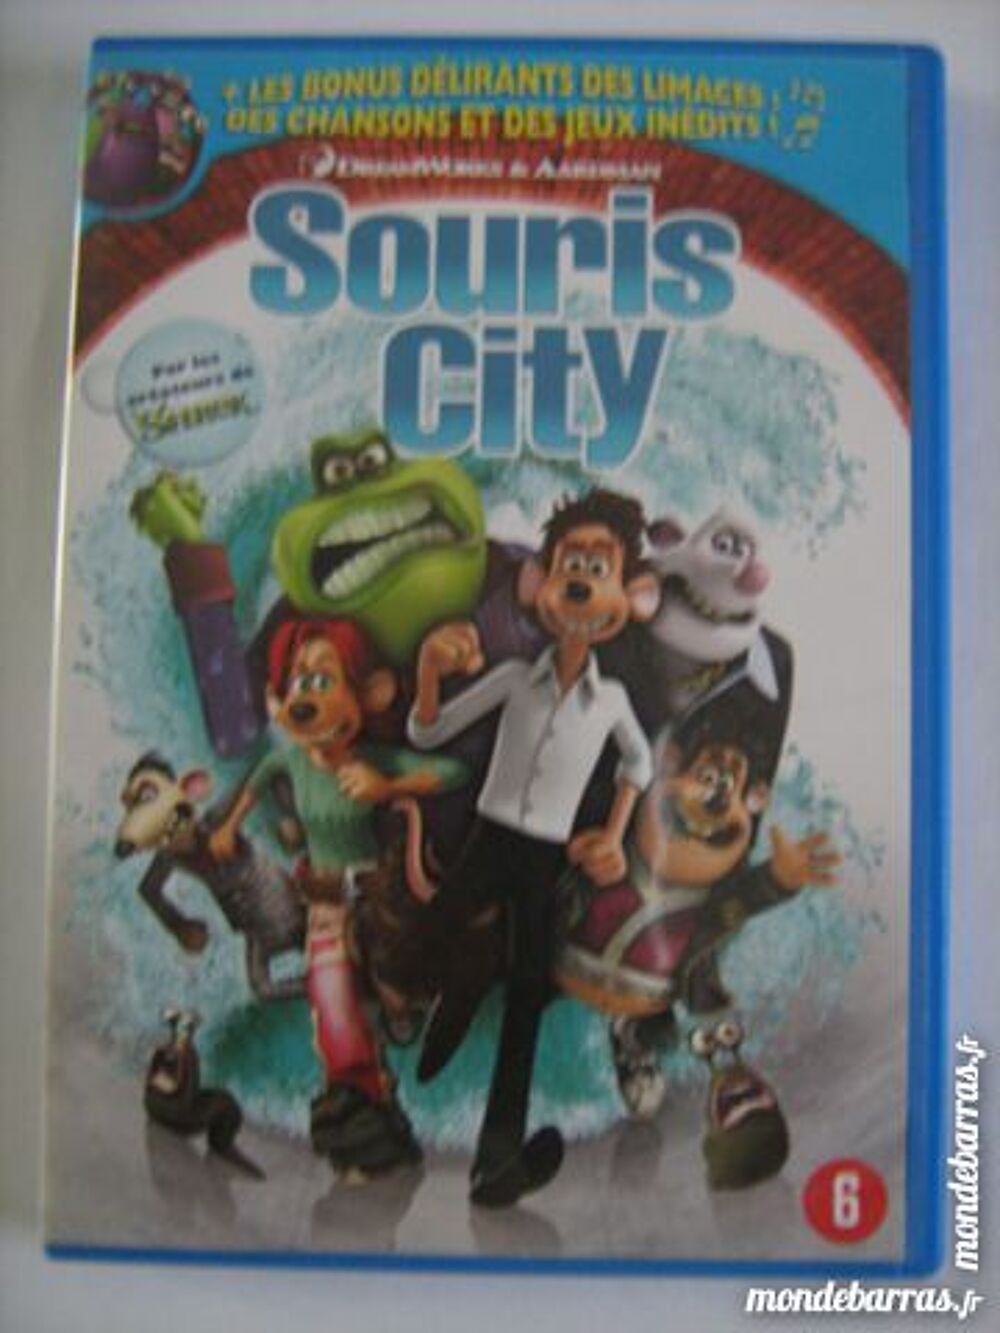 DVD SOURIS CITY DVD et blu-ray